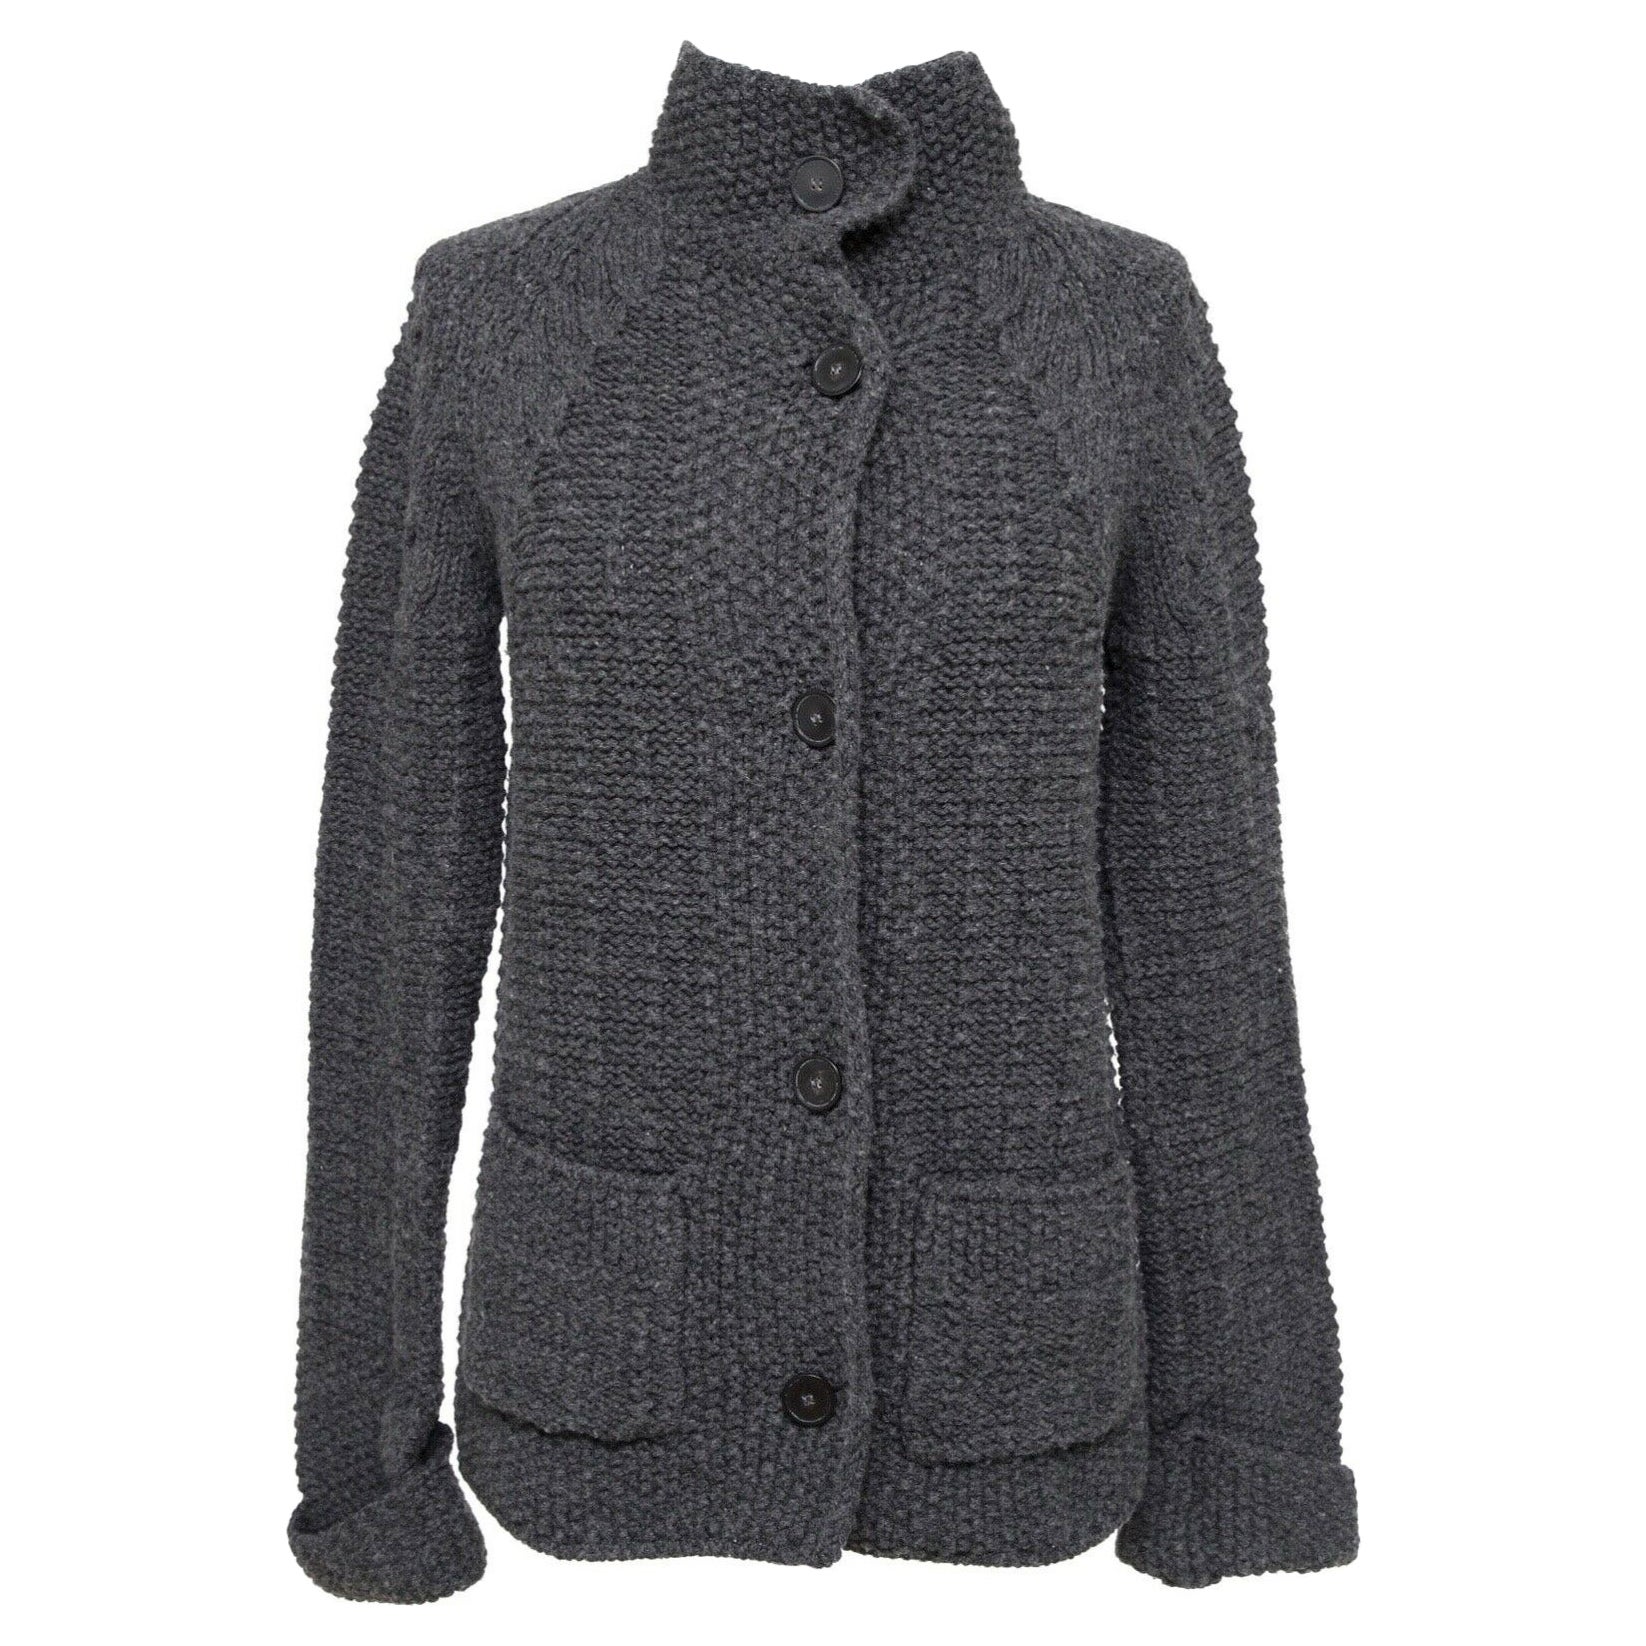 CHLOE Sweater Cardigan Knit Jacket CHARCOAL GREY Long Sleeve Sz XS 2011 For Sale